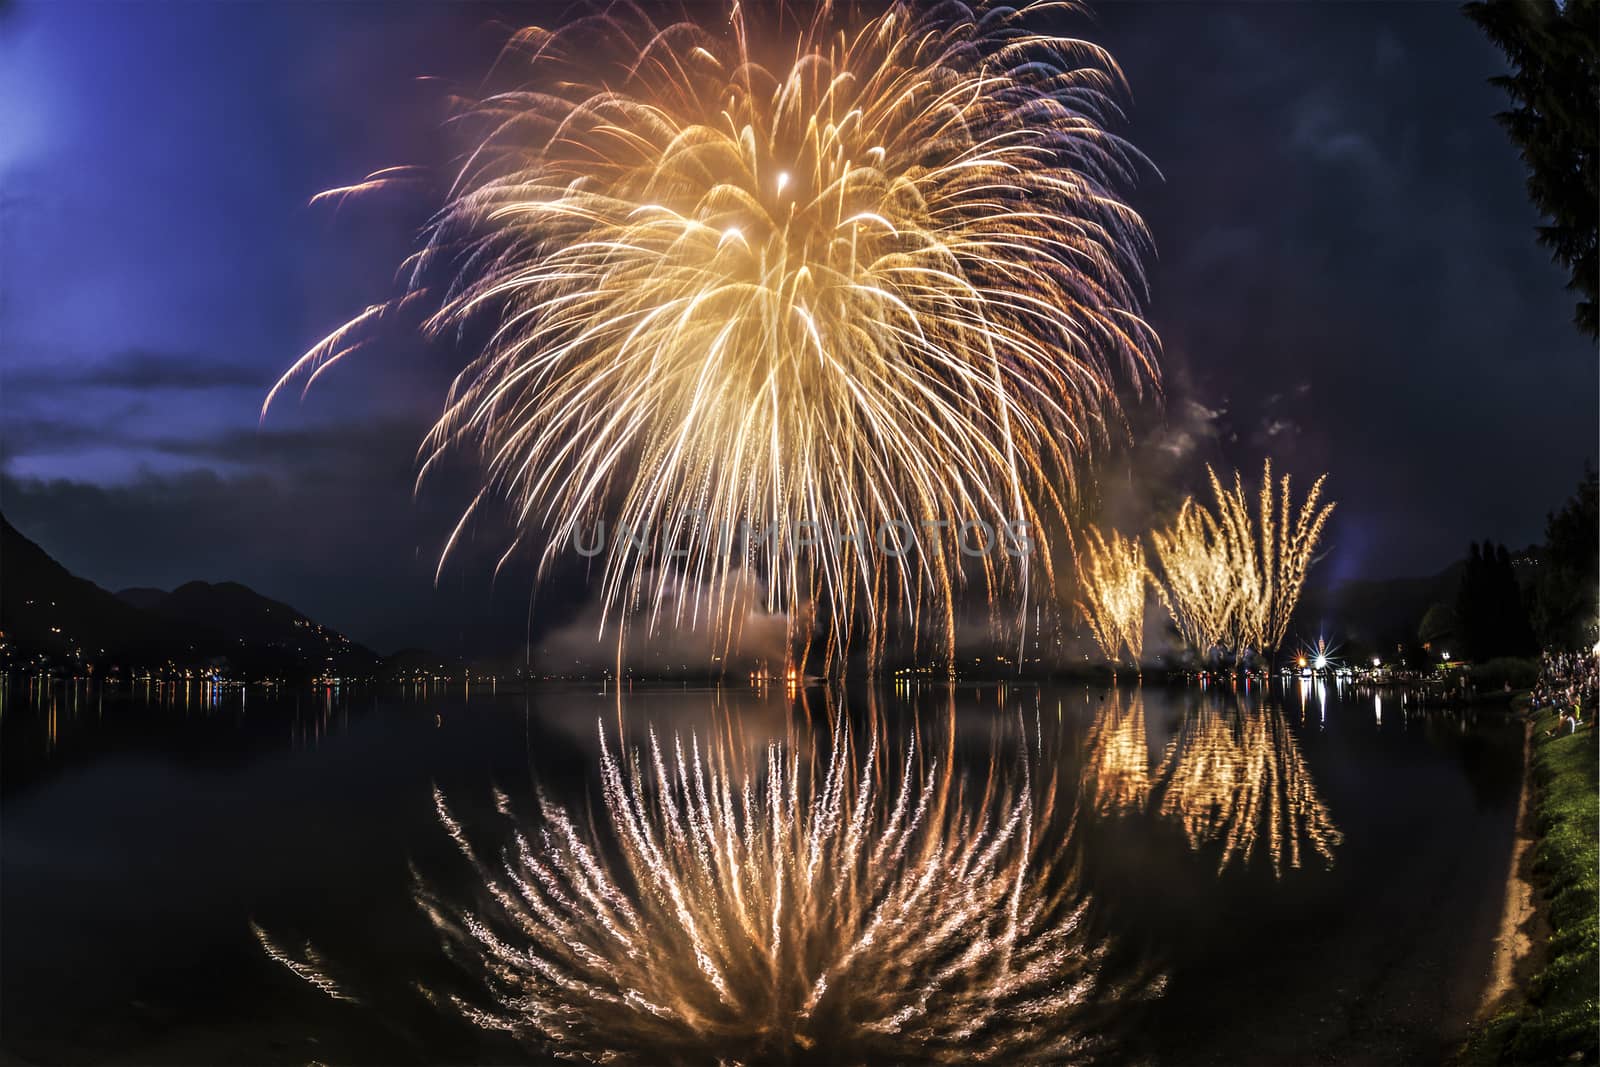 Fireworks on the Lugano Lake, Lavena-Ponte Tresa by Mdc1970